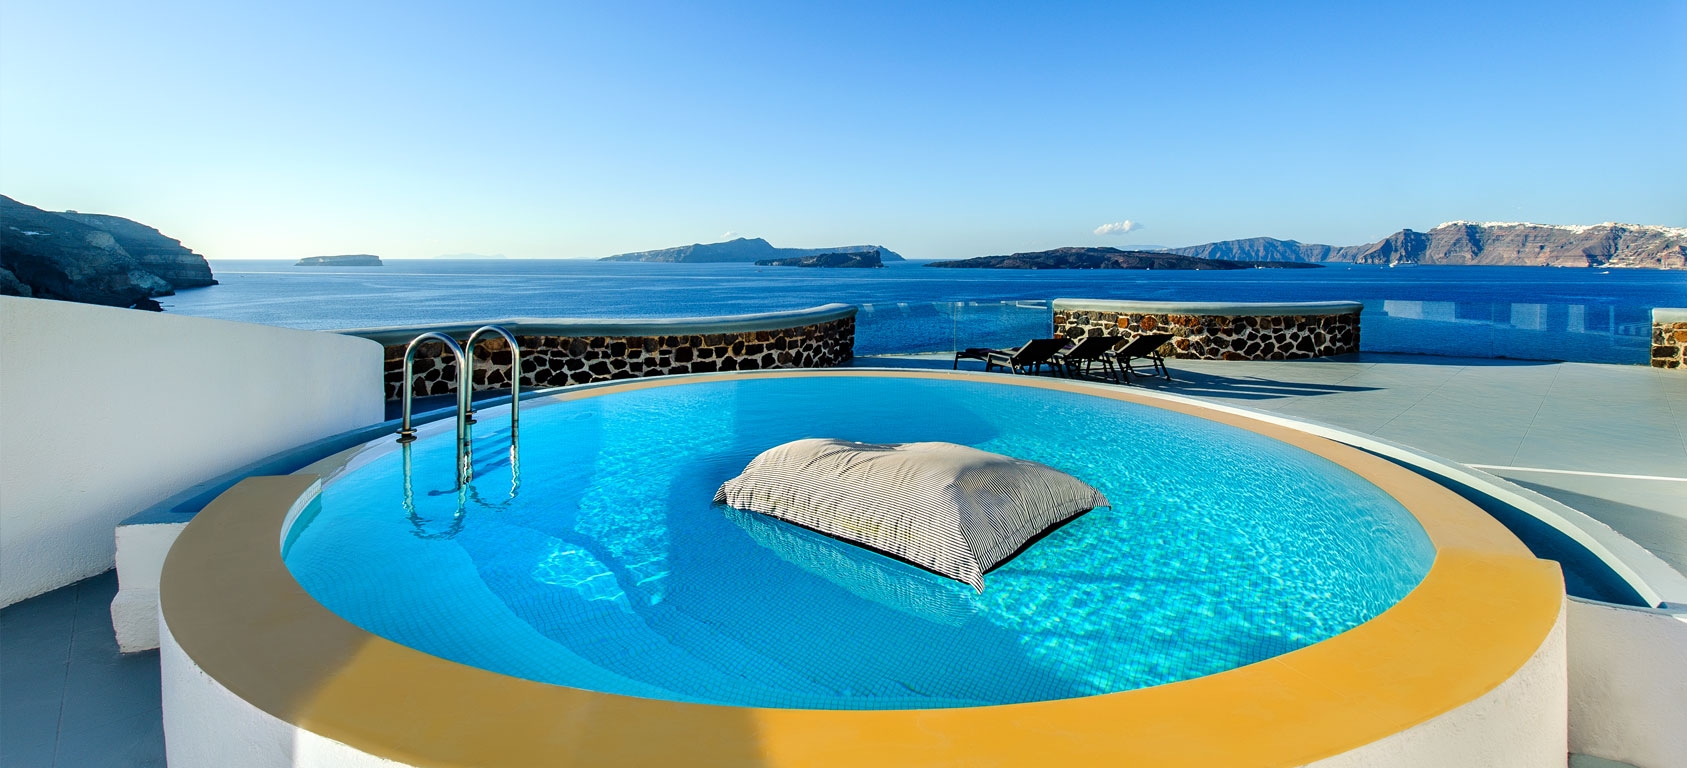 The Ambassador Villa Private Pool & Spa, Ambassador Aegean Luxury 